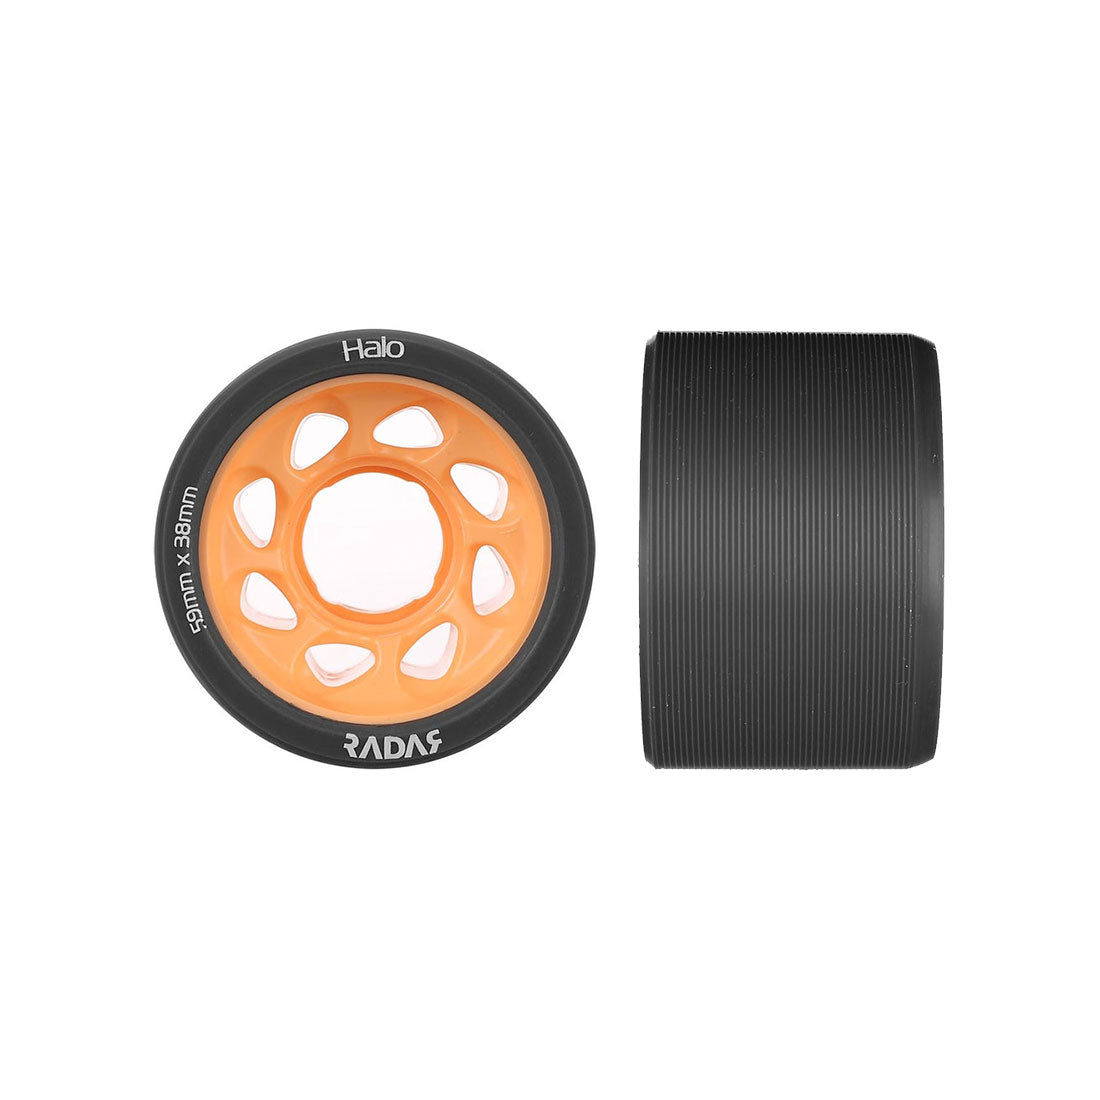 Radar Halo 59x38mm Wheels 4pk 86a Orange Roller Skate Wheels